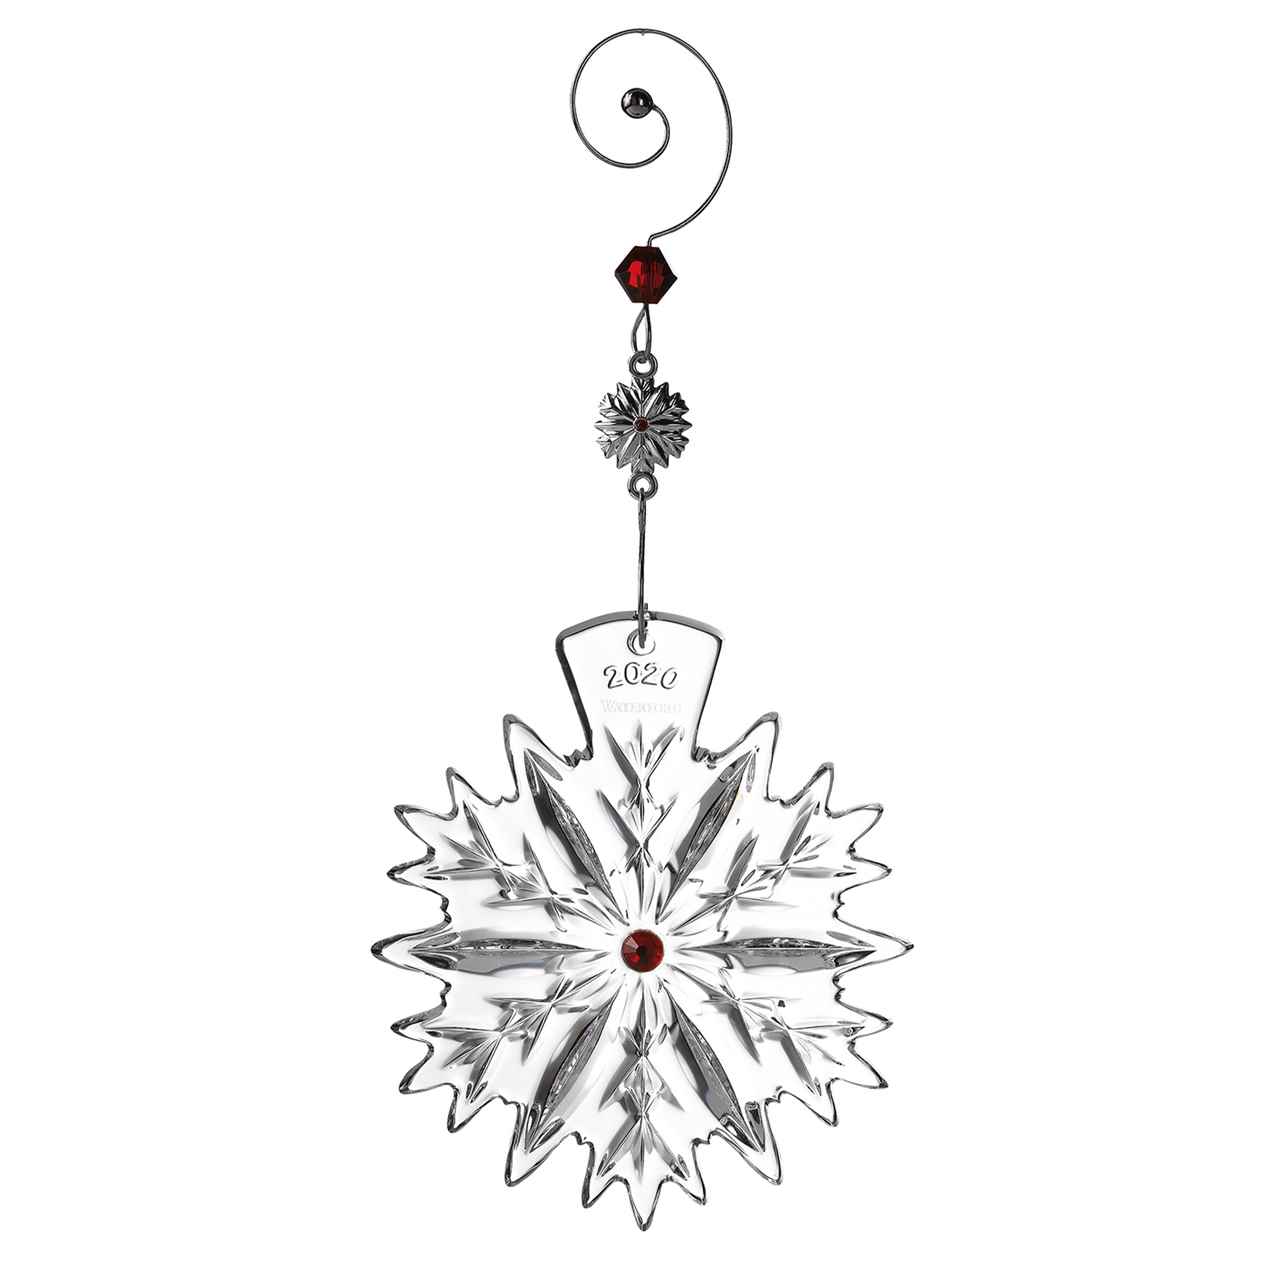  Snowflake Wishes Love Ornament 2020 